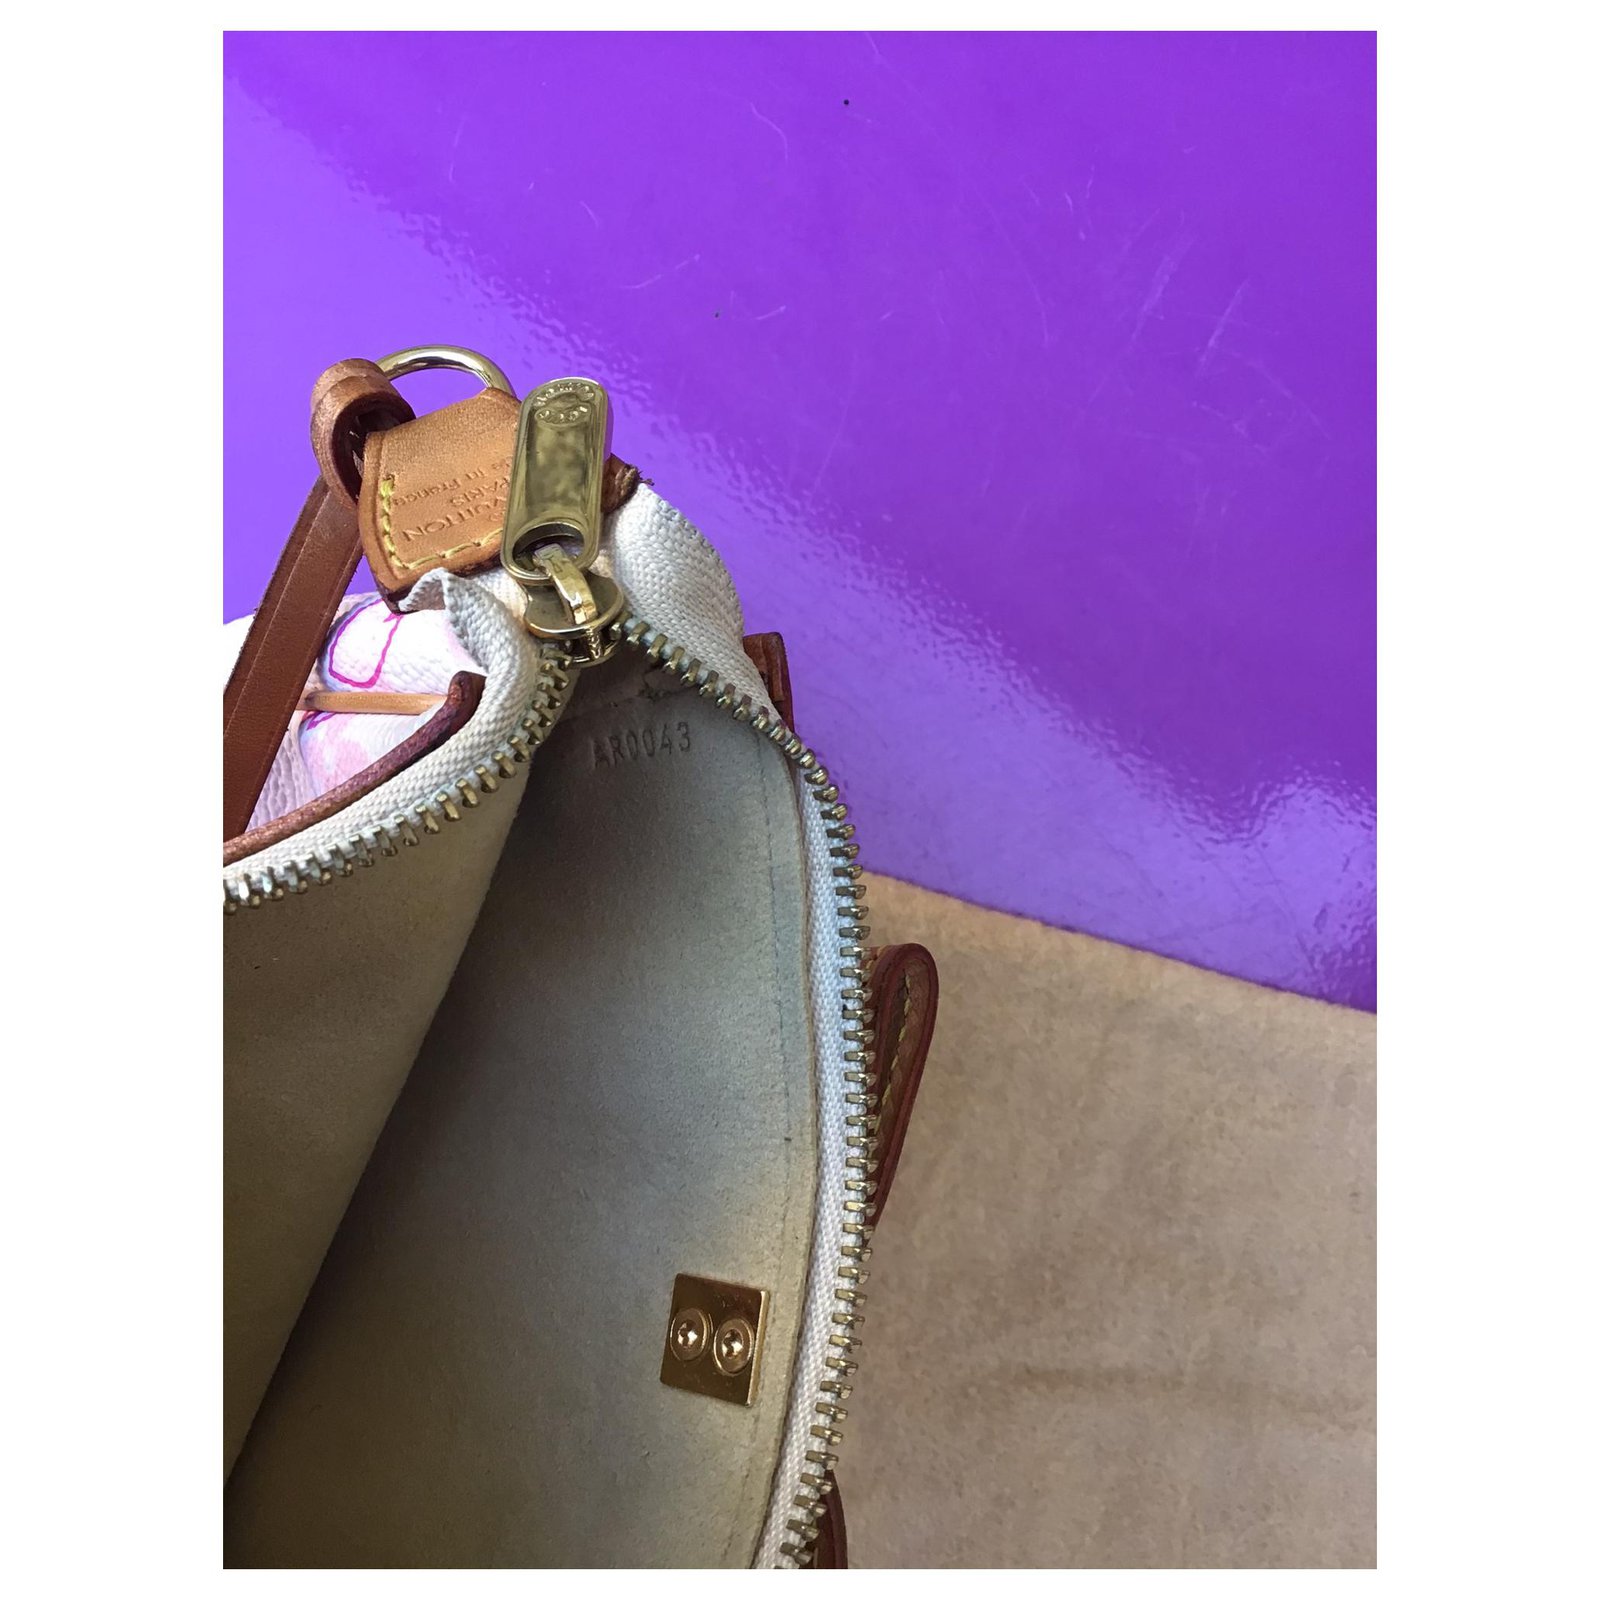 LV Clutch Bag - Pink Button – shopvintageluxury